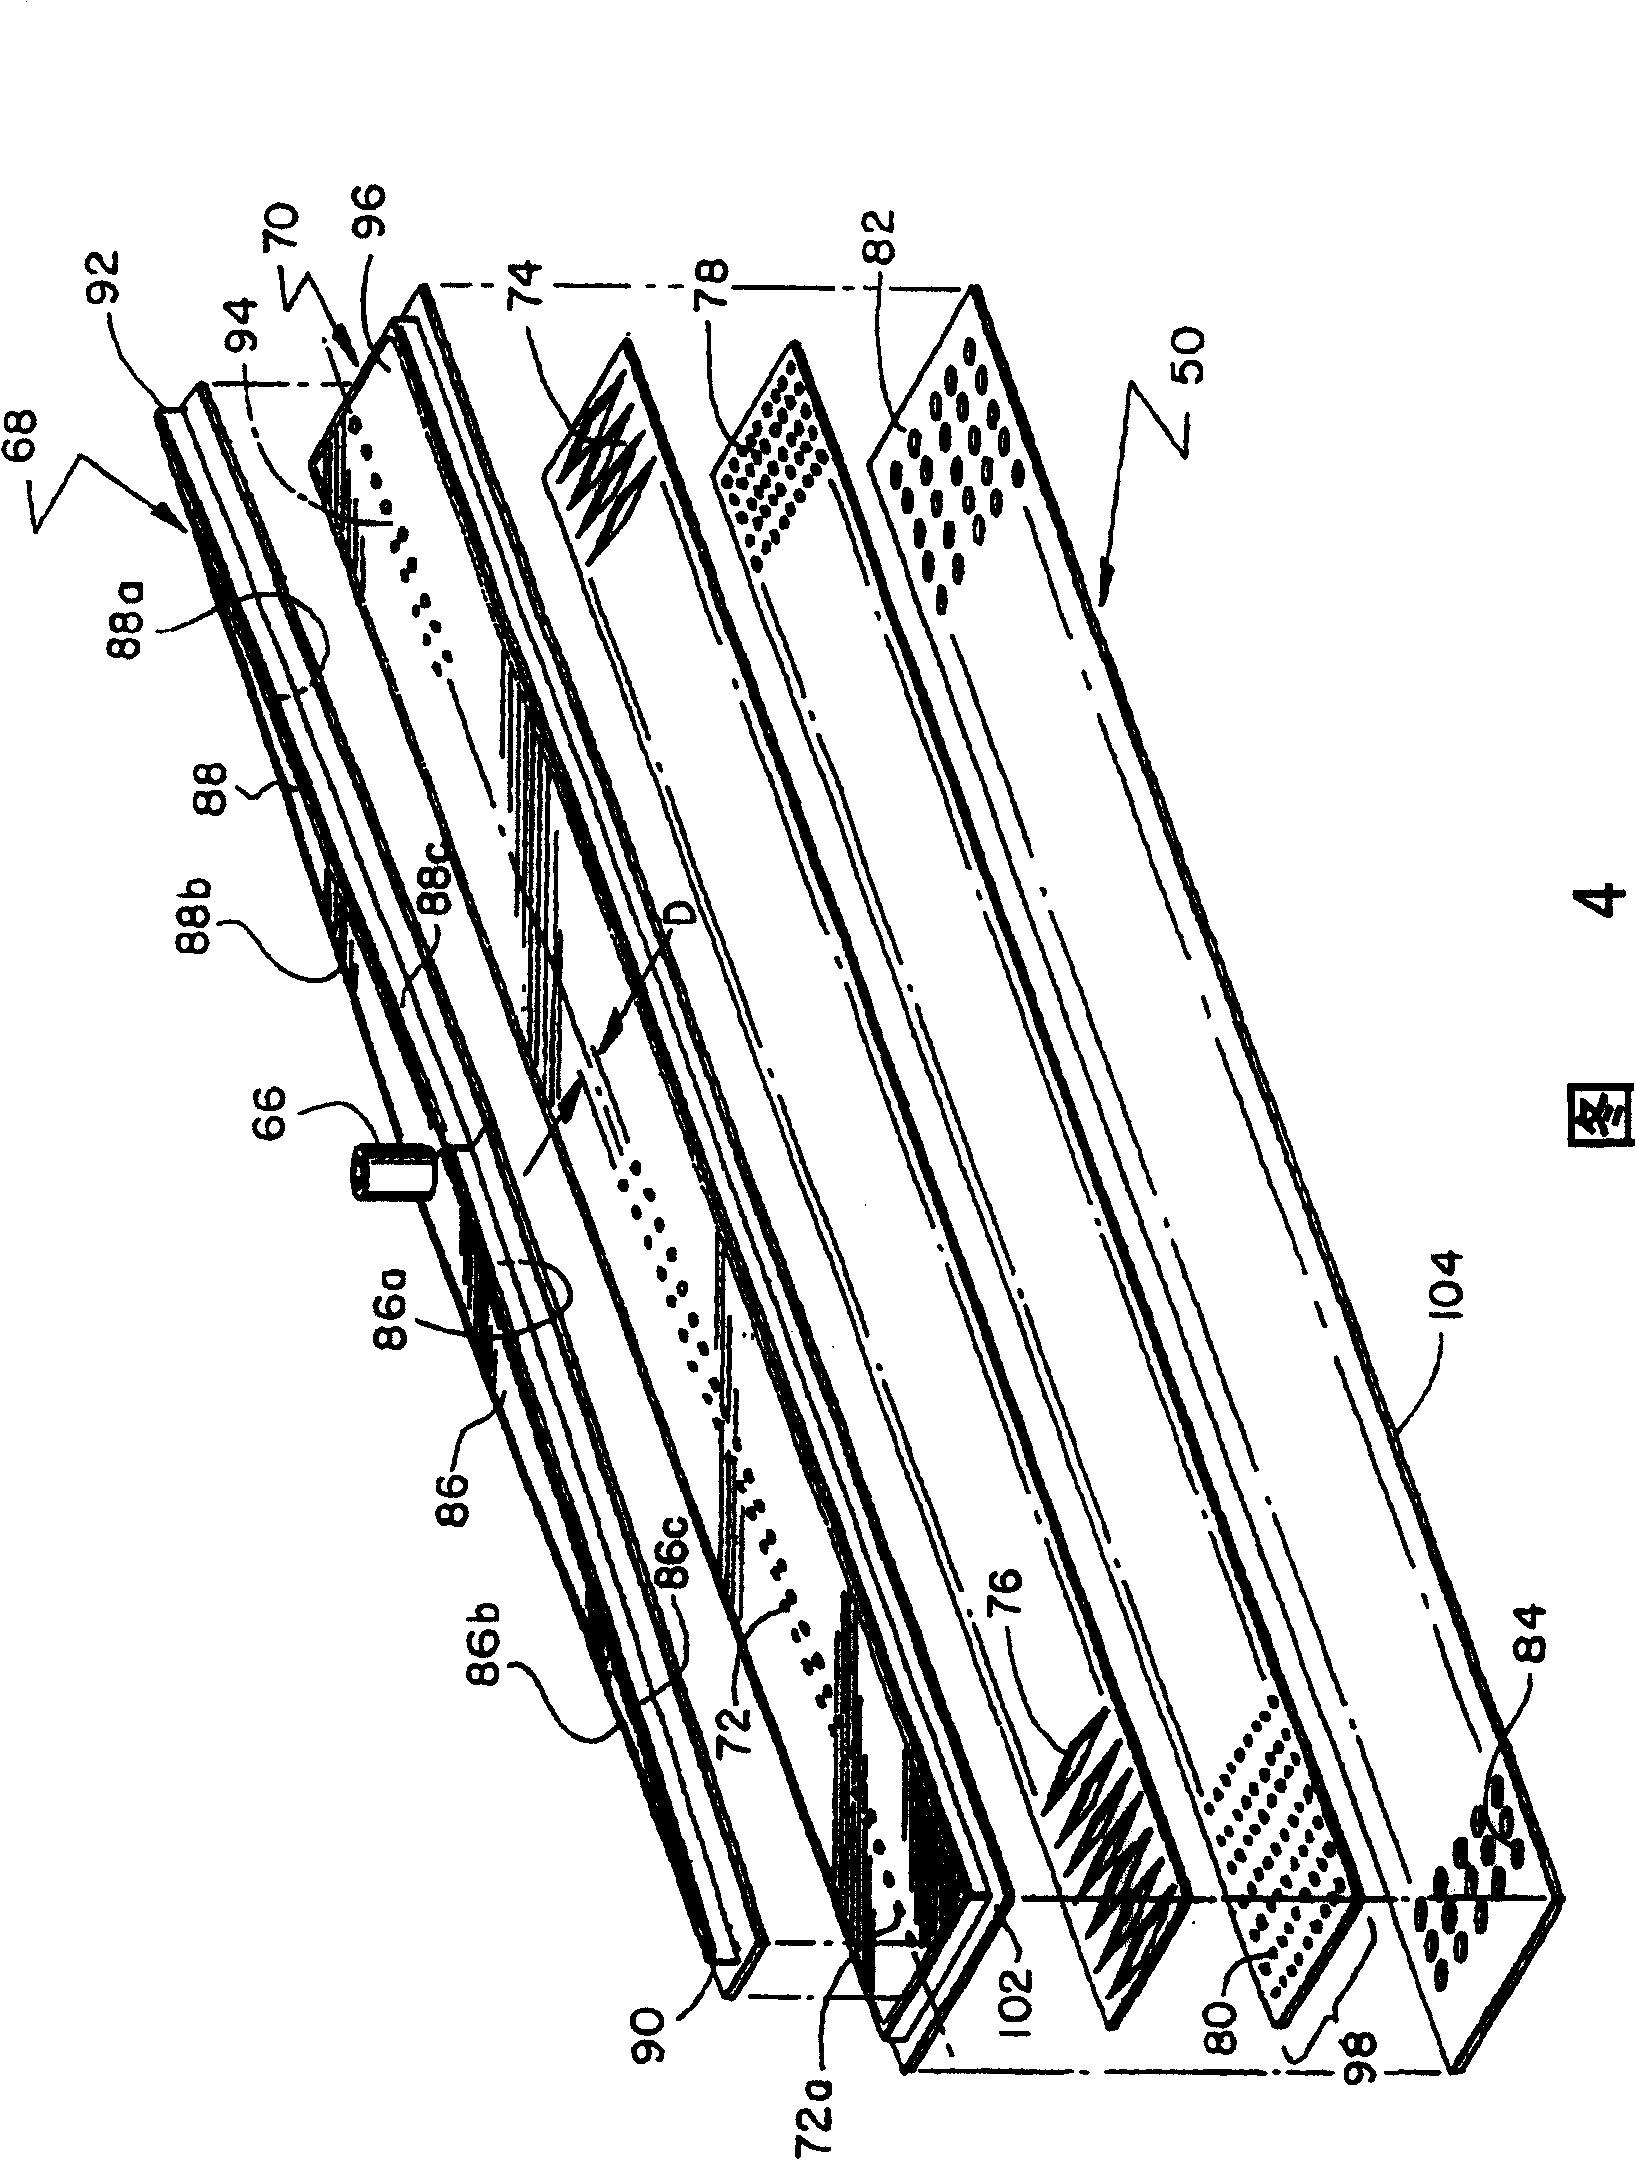 Falling film evaporator having two-phase refrigerant distribution system